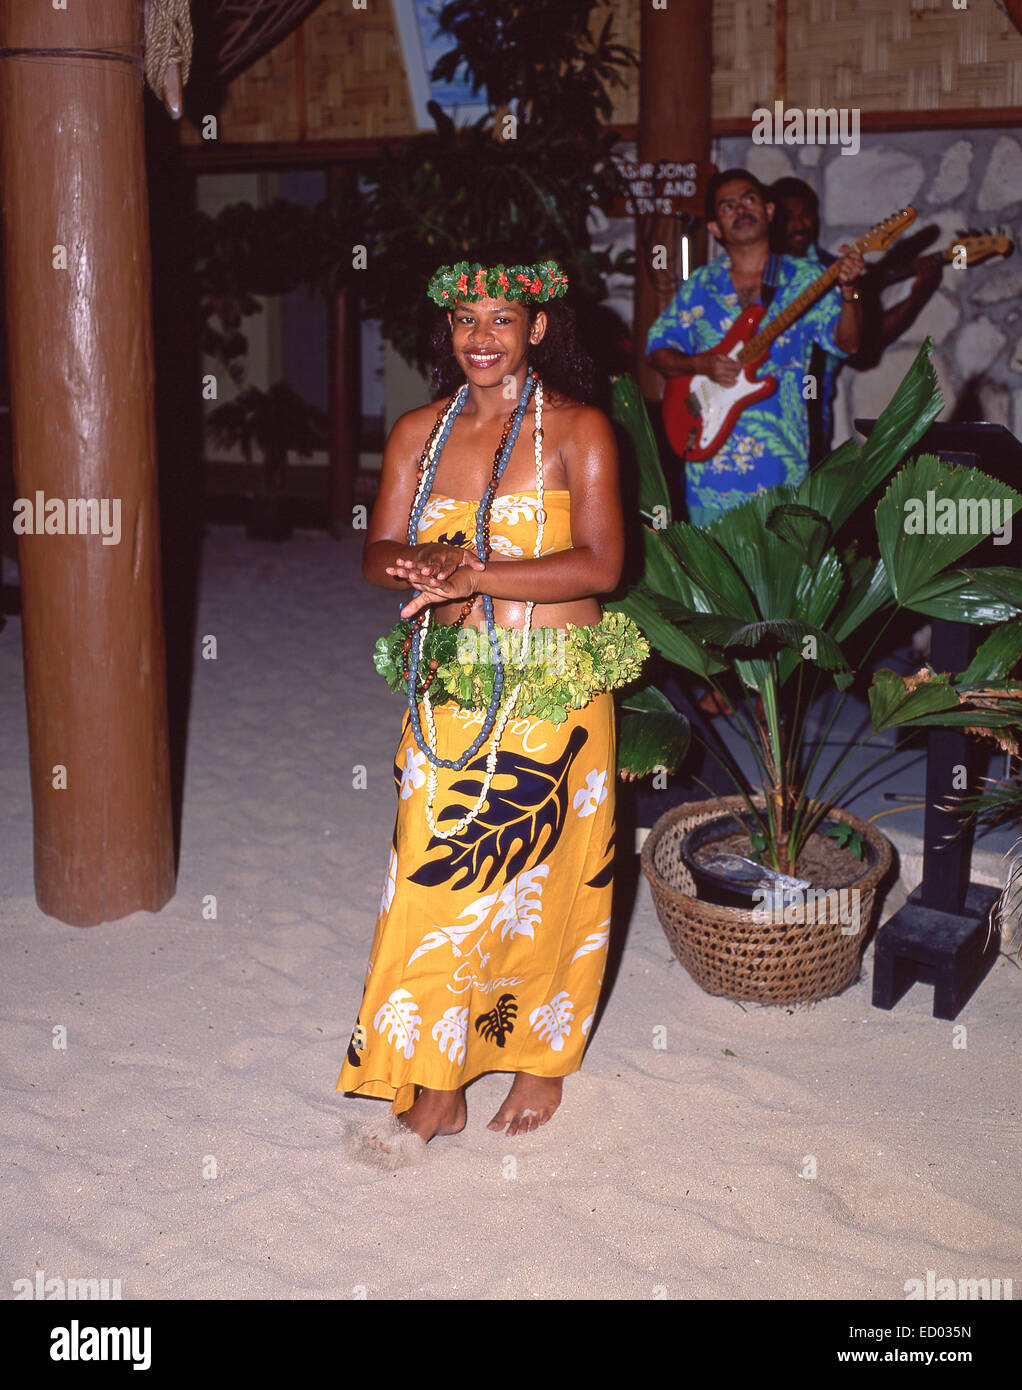 Polynesische Tanz show, Beachcomber Island Resort, Mamanuca Inseln, Viti Levu, Republik Fidschi-Inseln Stockfoto